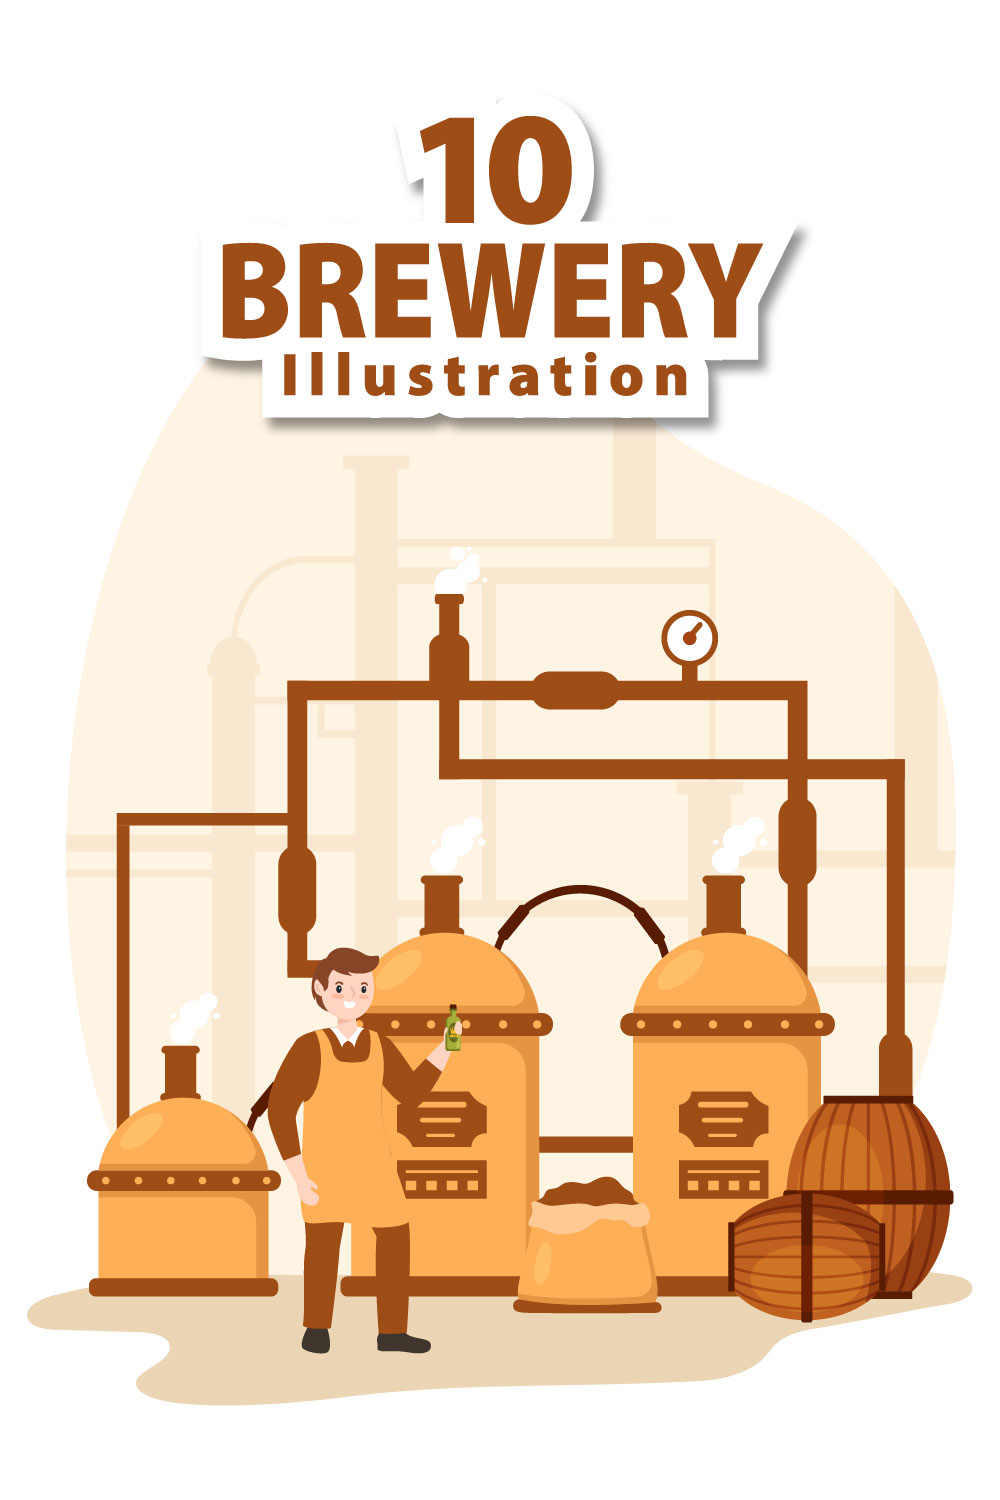 Beer Brewery Illustration pinterest image.